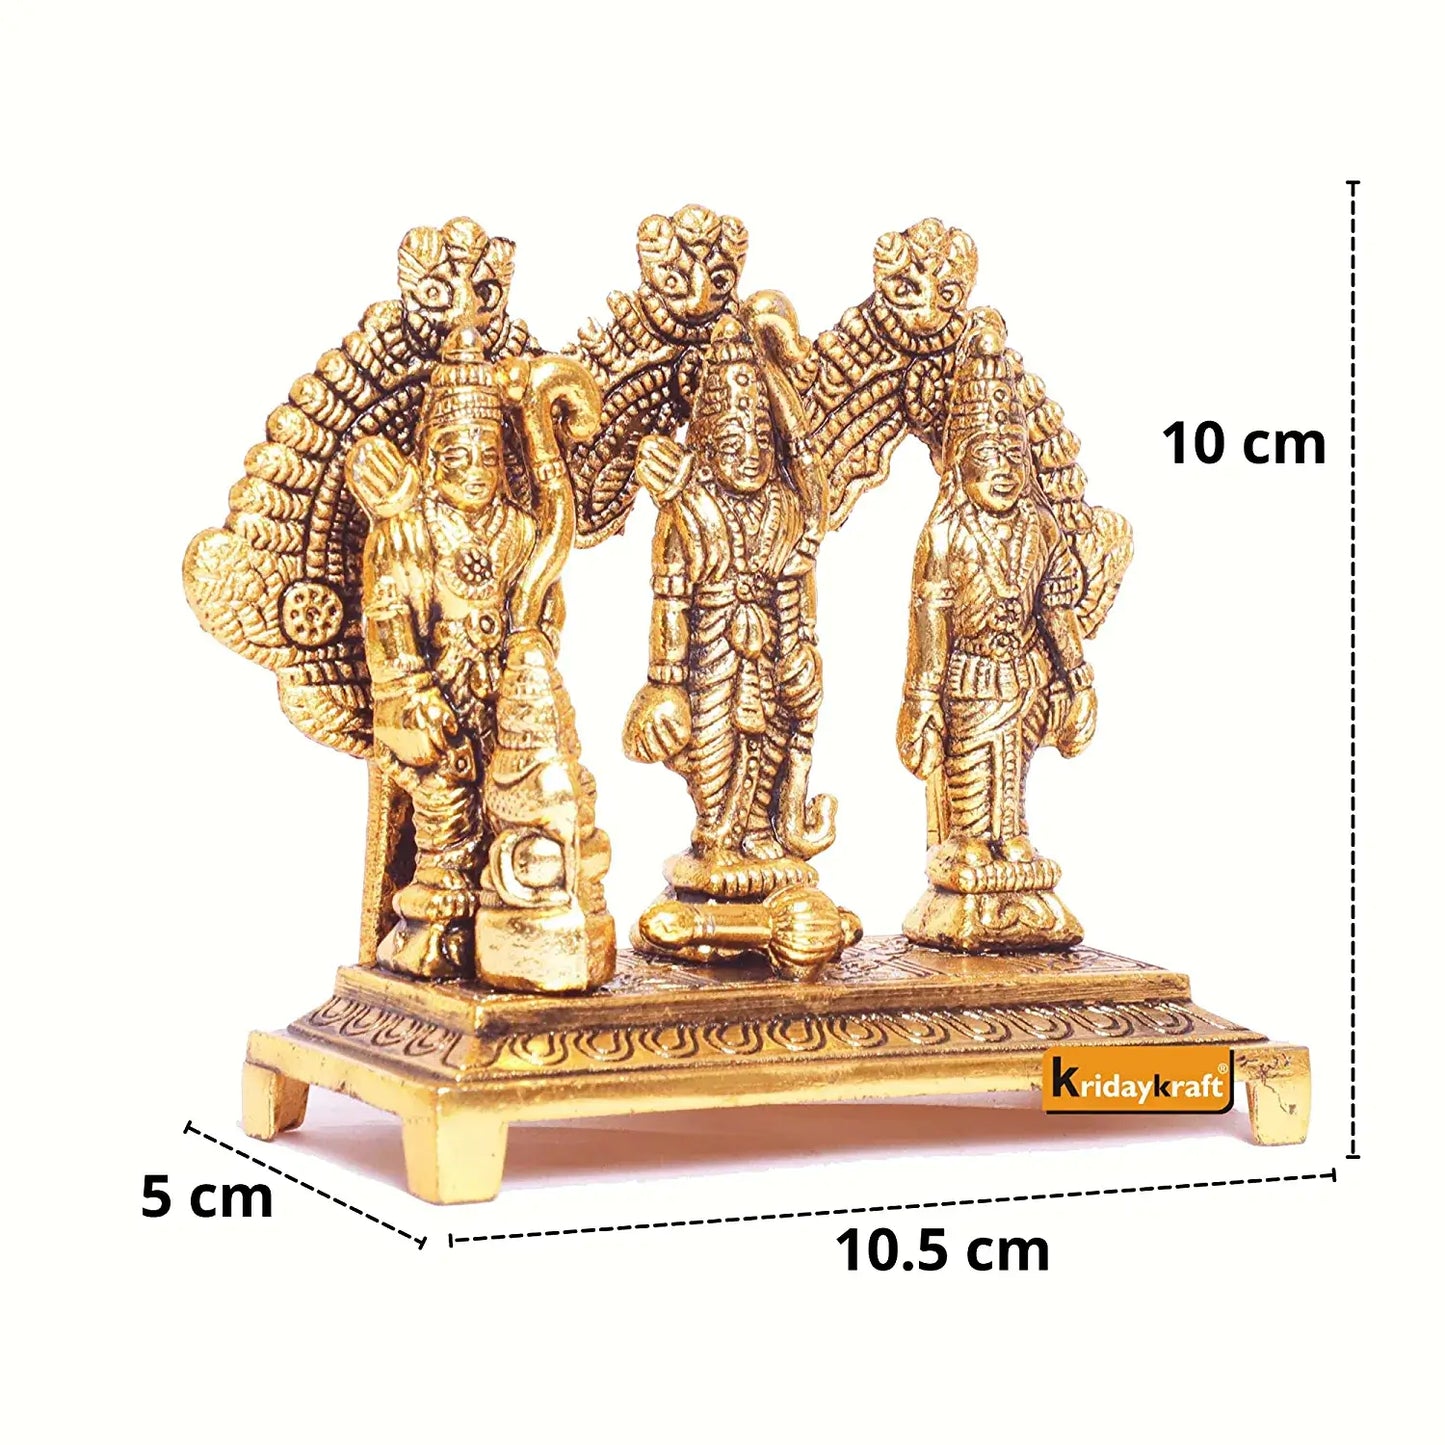 Shri Ram Darbar Metal Statue for Pooja, Lord Rama Laxman Sita & Hanuman Murti Religious Idol for Home,Office Decor, Showpiece Figurines,Gift Article